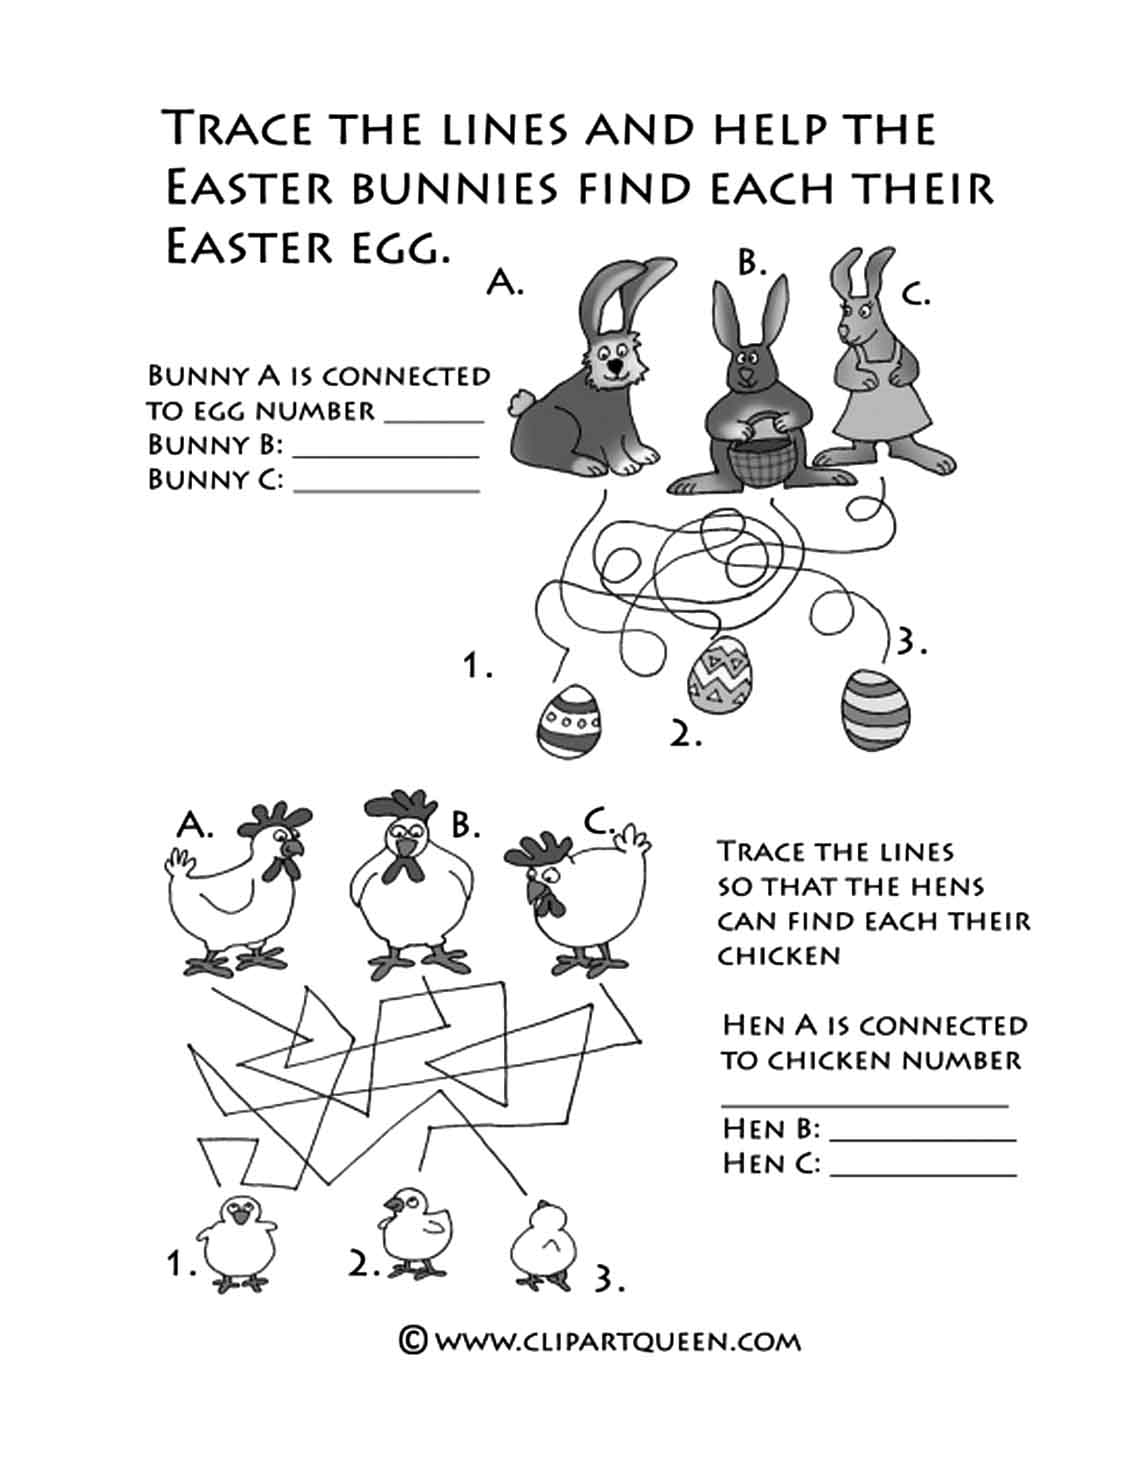 Easter printables activities helping bunnies